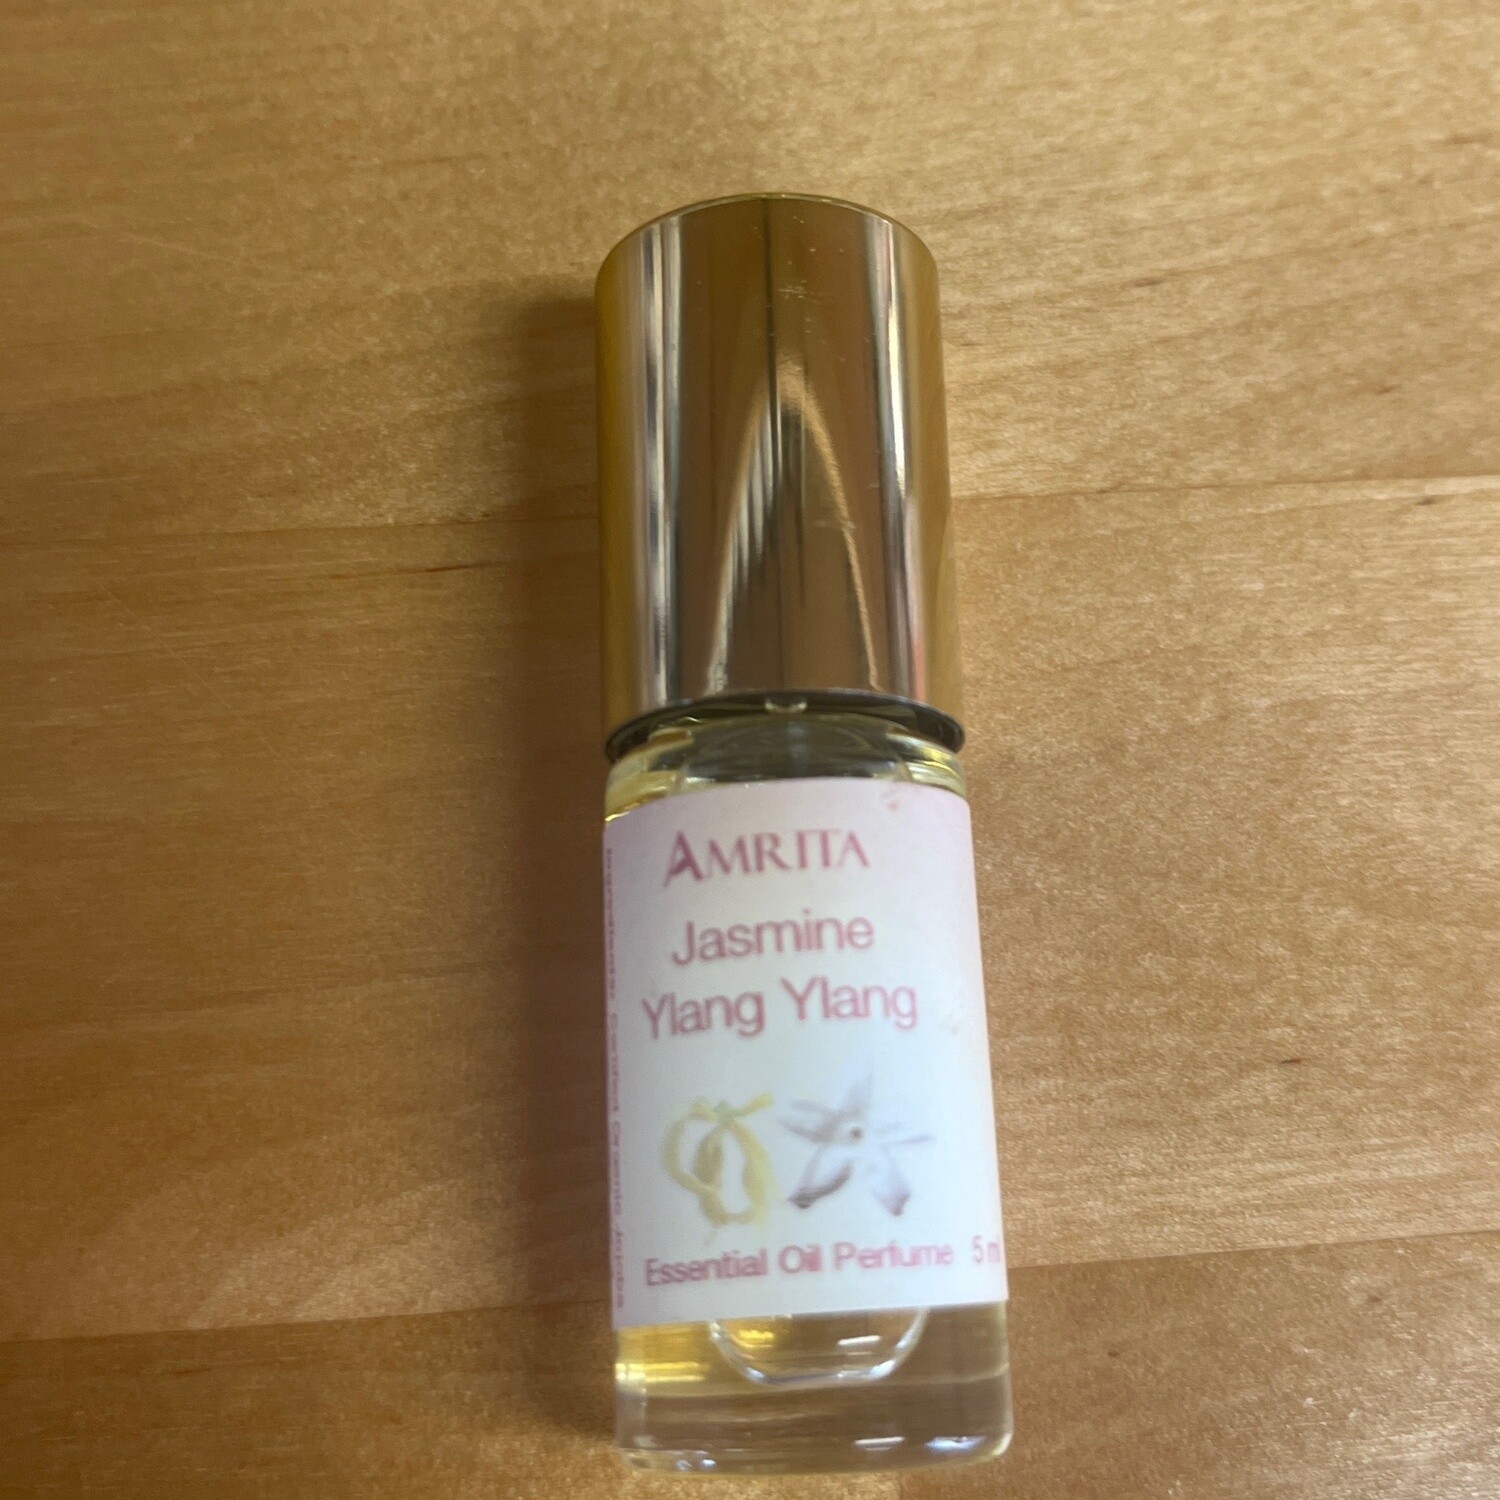 Jasmine Ylang Ylang Perfume